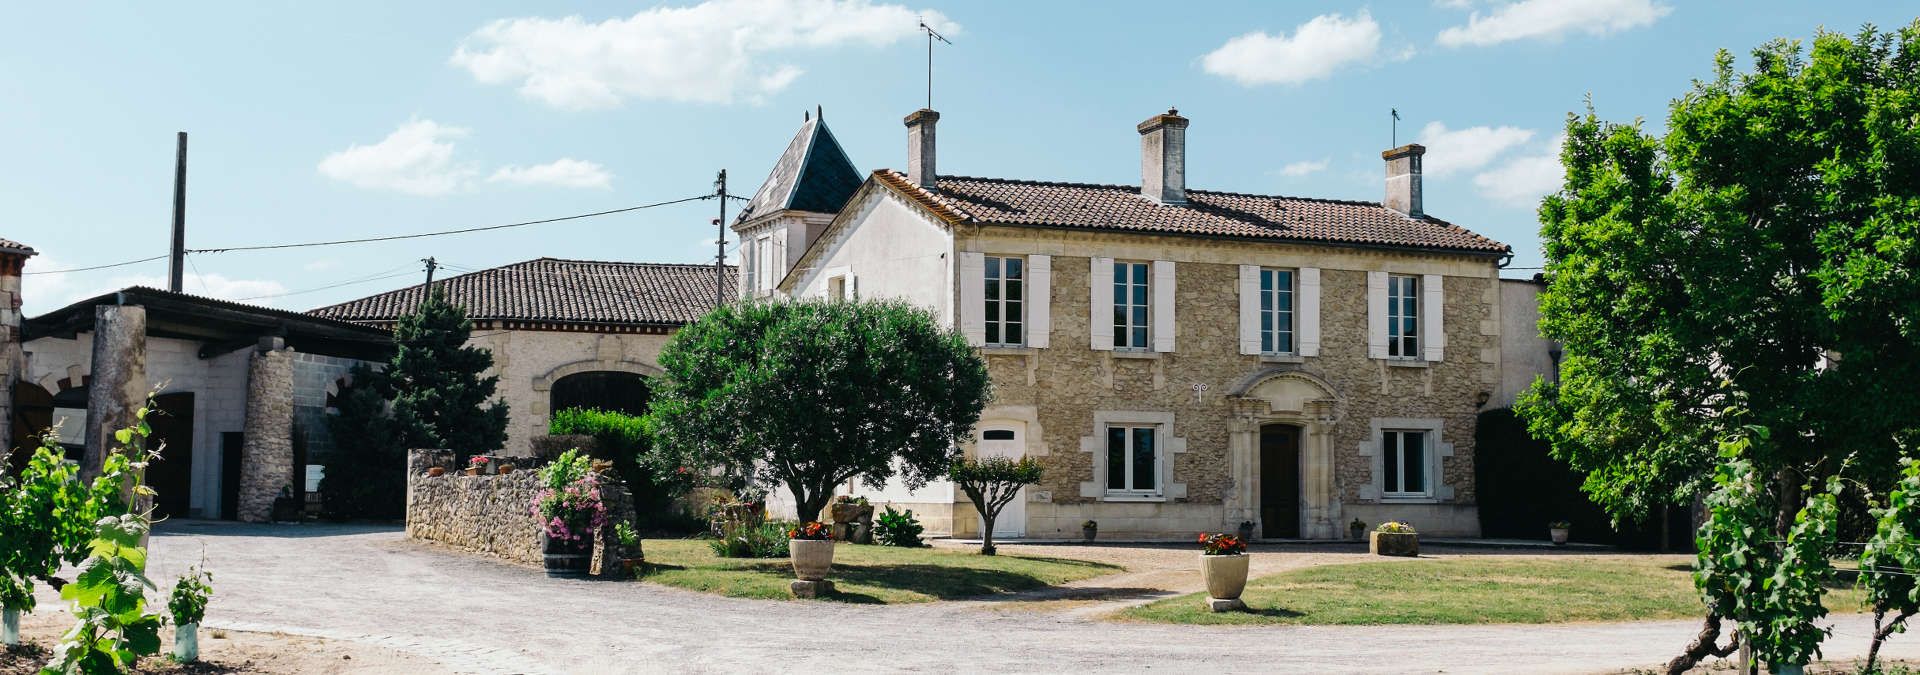 Chateau Huradin - Rue des Vignerons